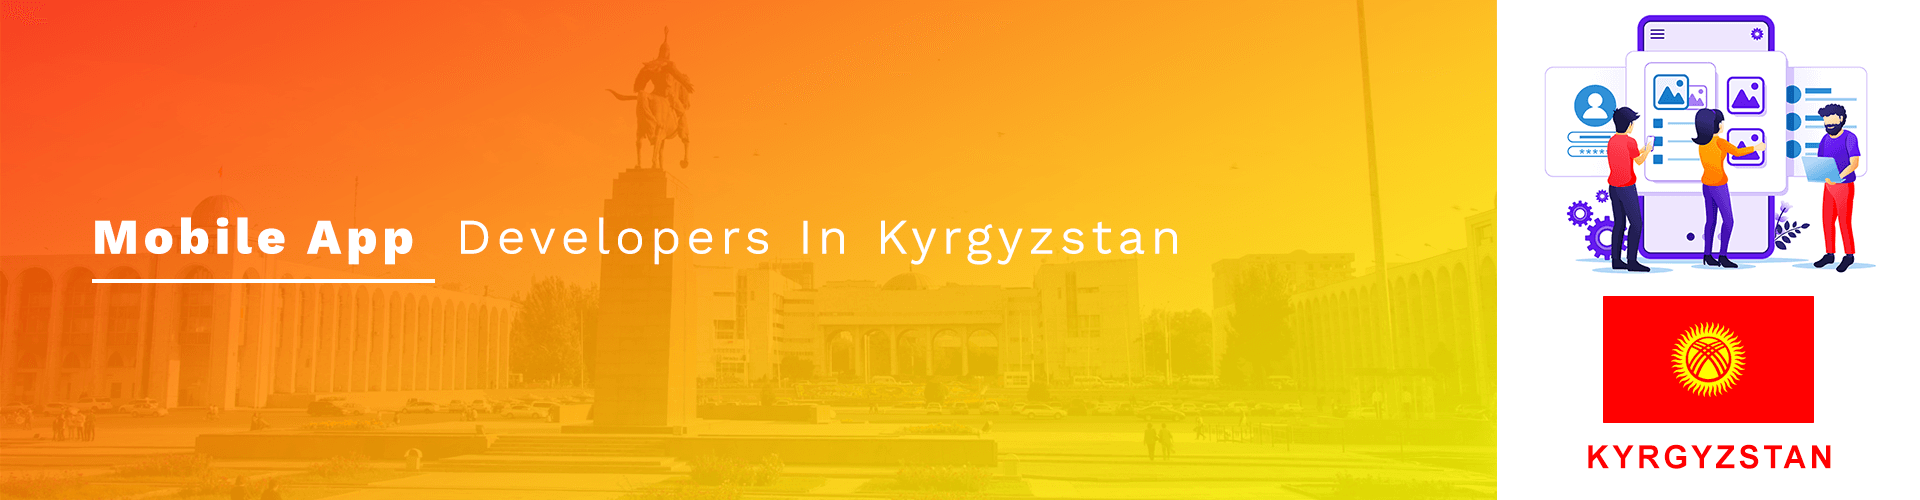 mobile app development kyrgyzstan